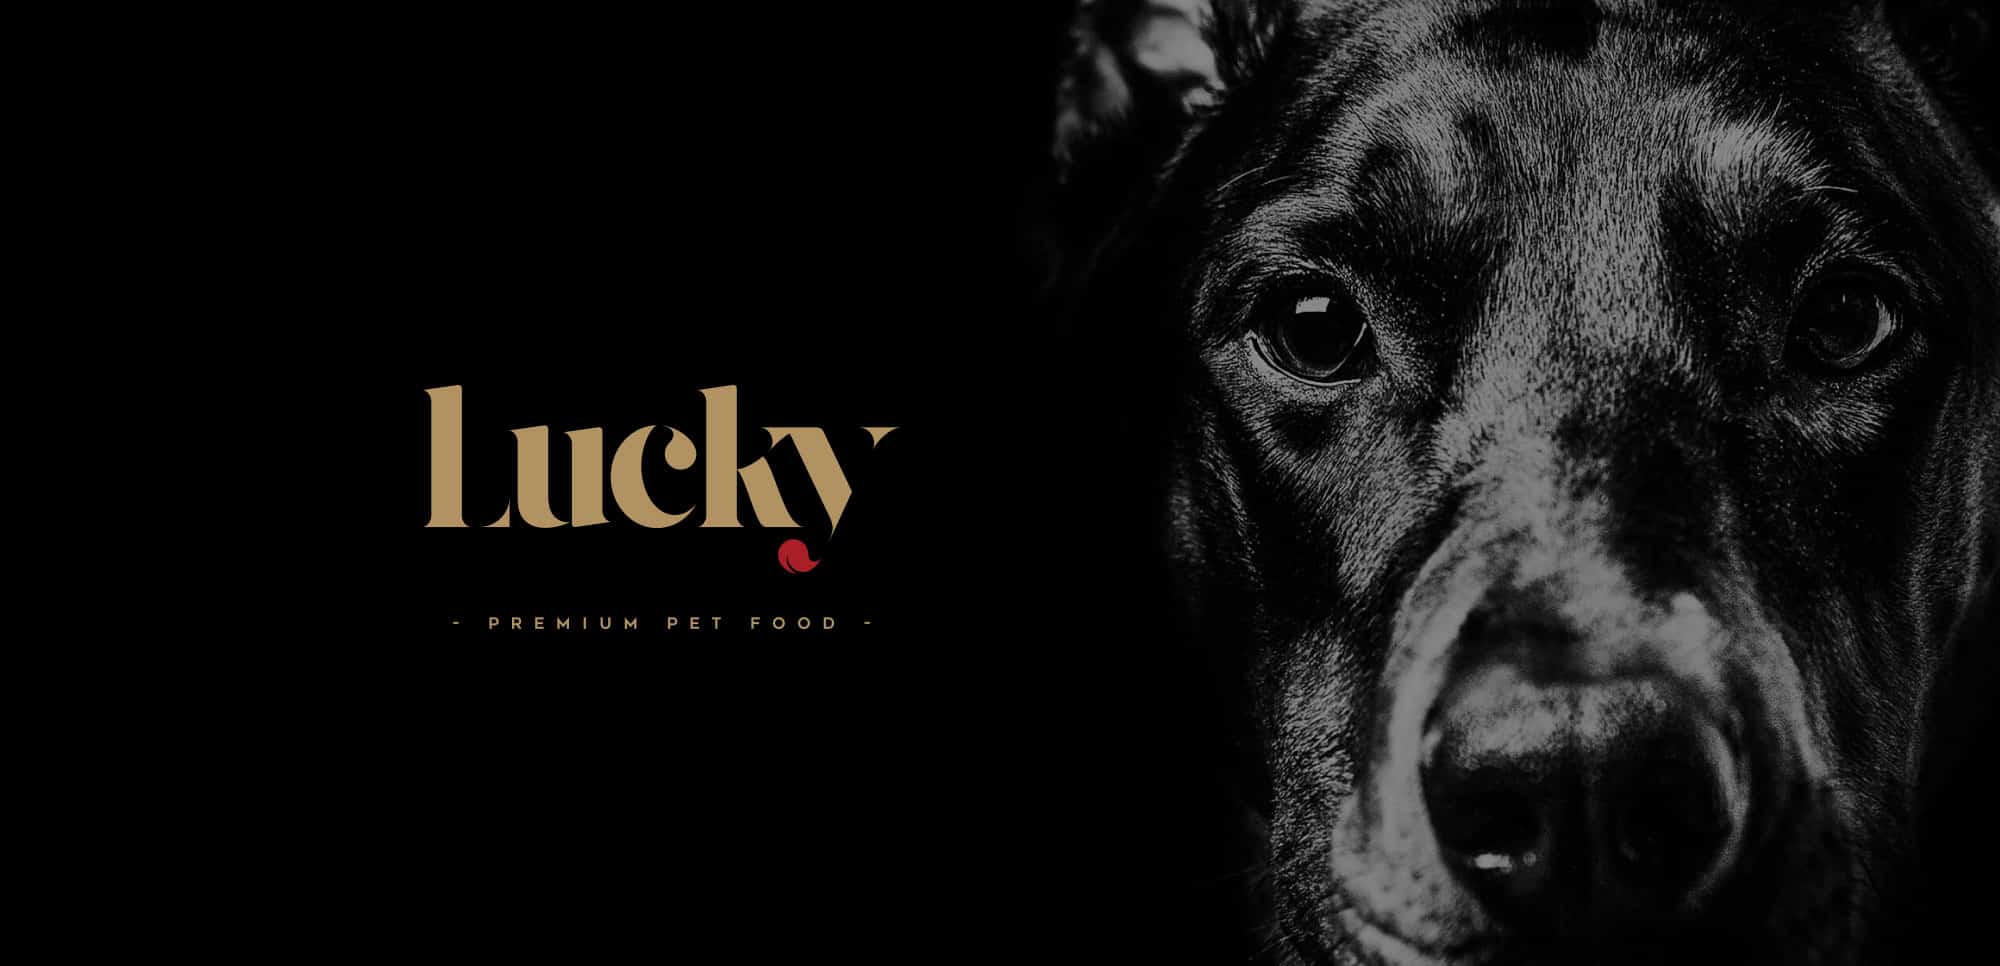 Lucky - Premium Pet Food